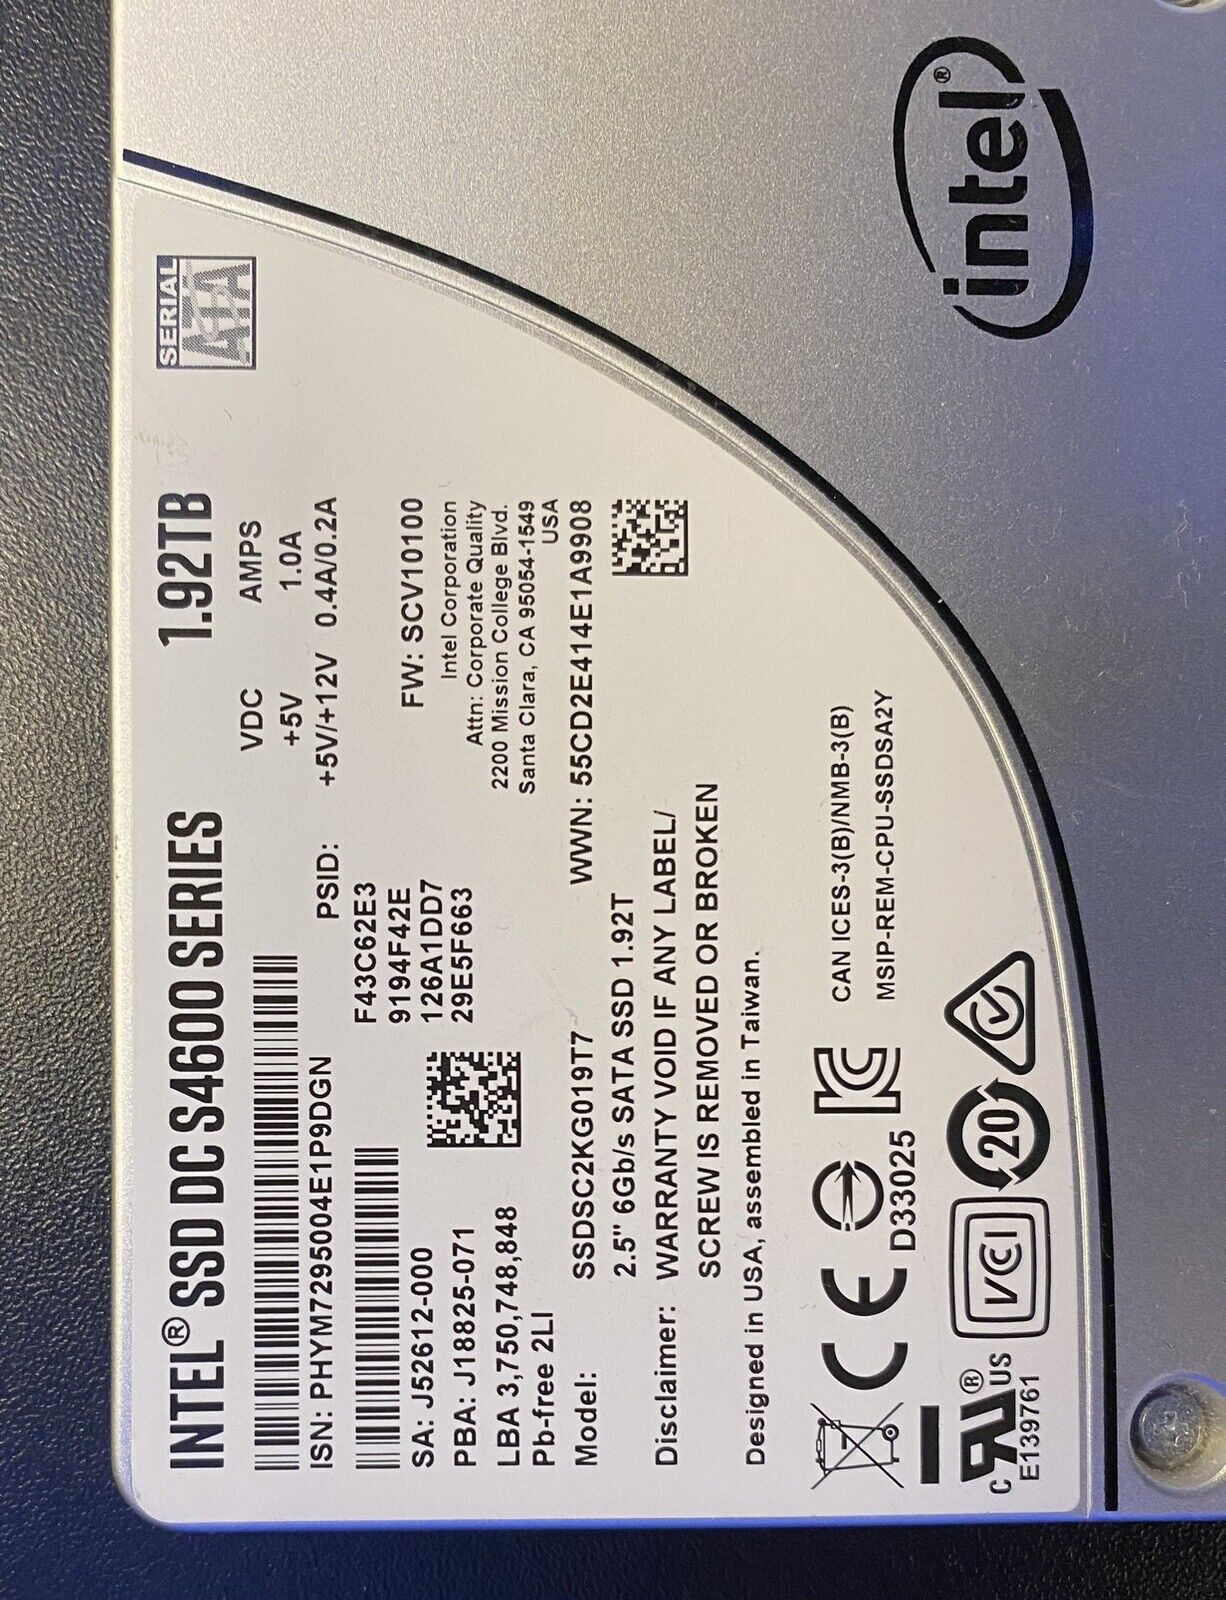 Intel SSD DC S4600 SERIES, 1.92TB, 2.5